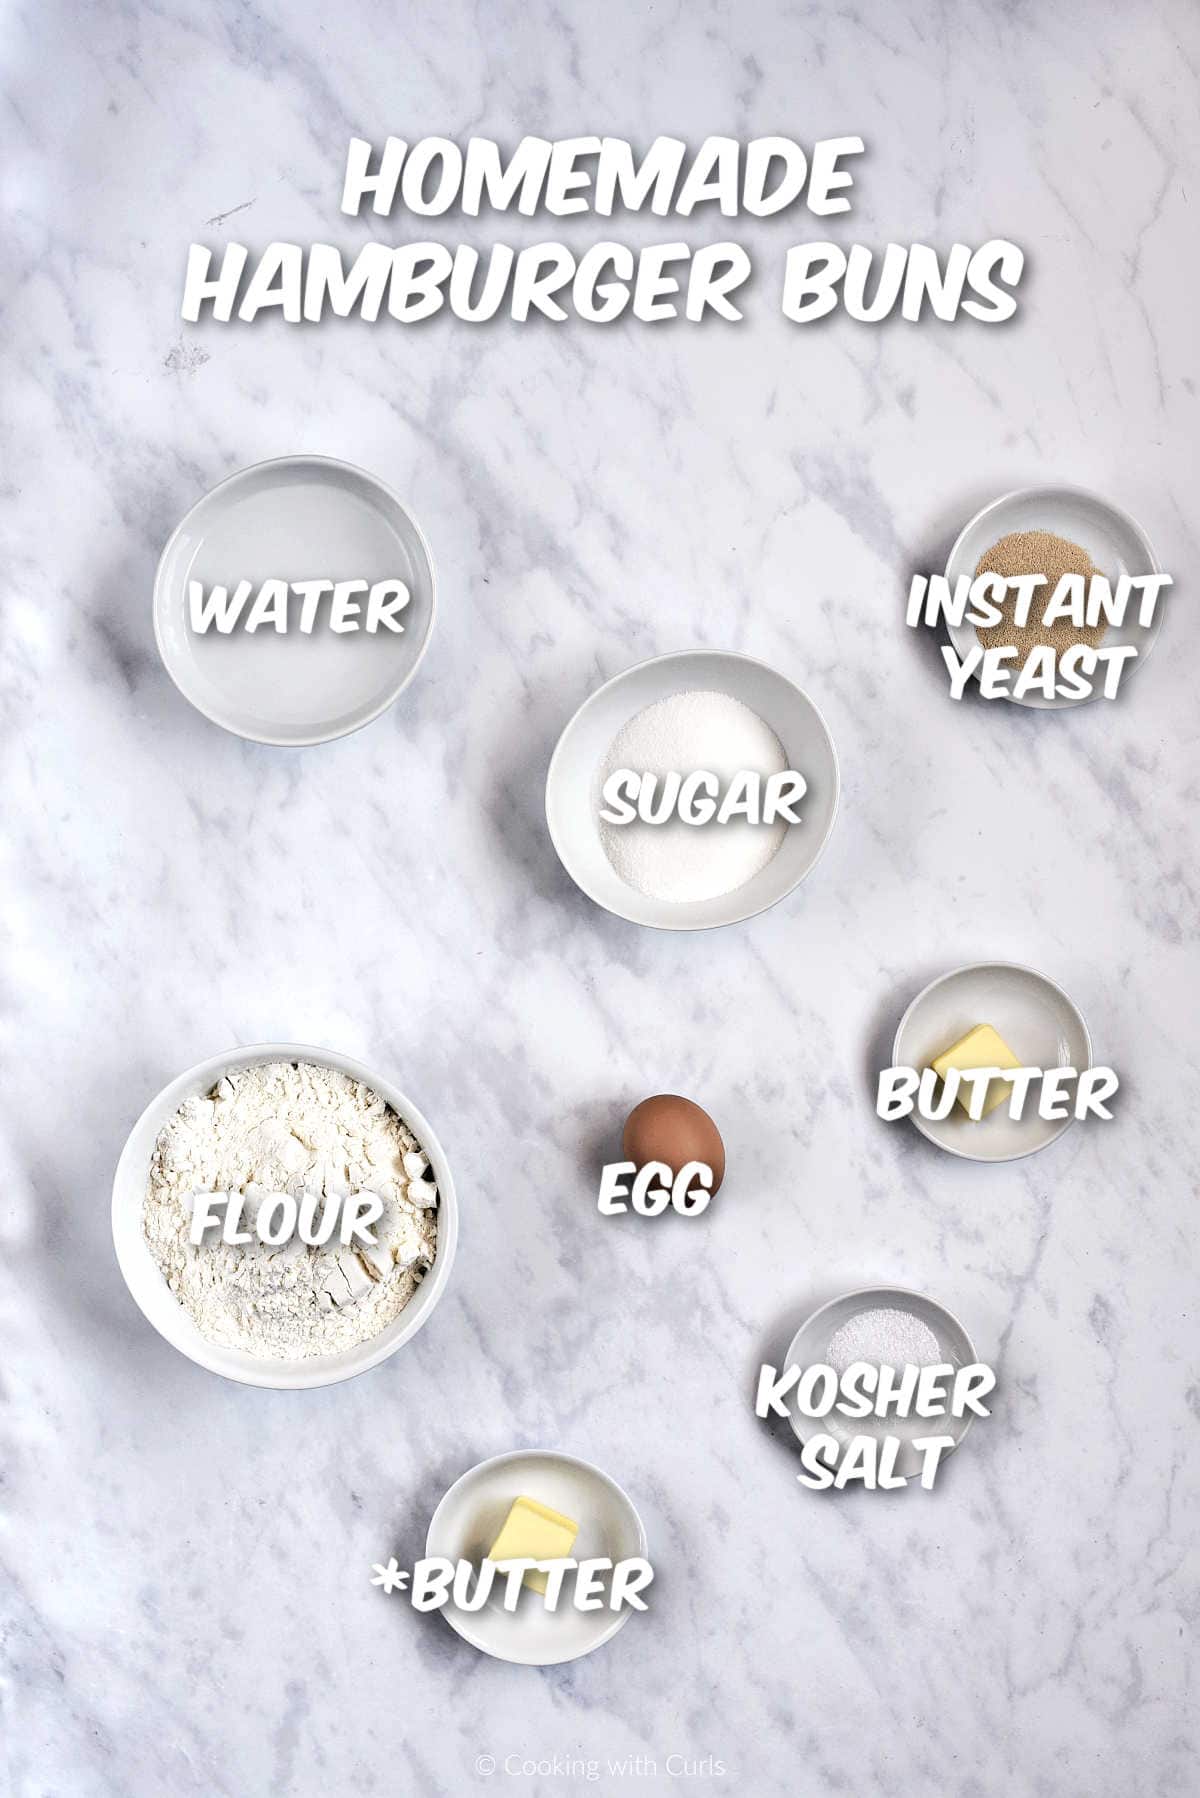 Ingredients to make homemade hamburger buns.